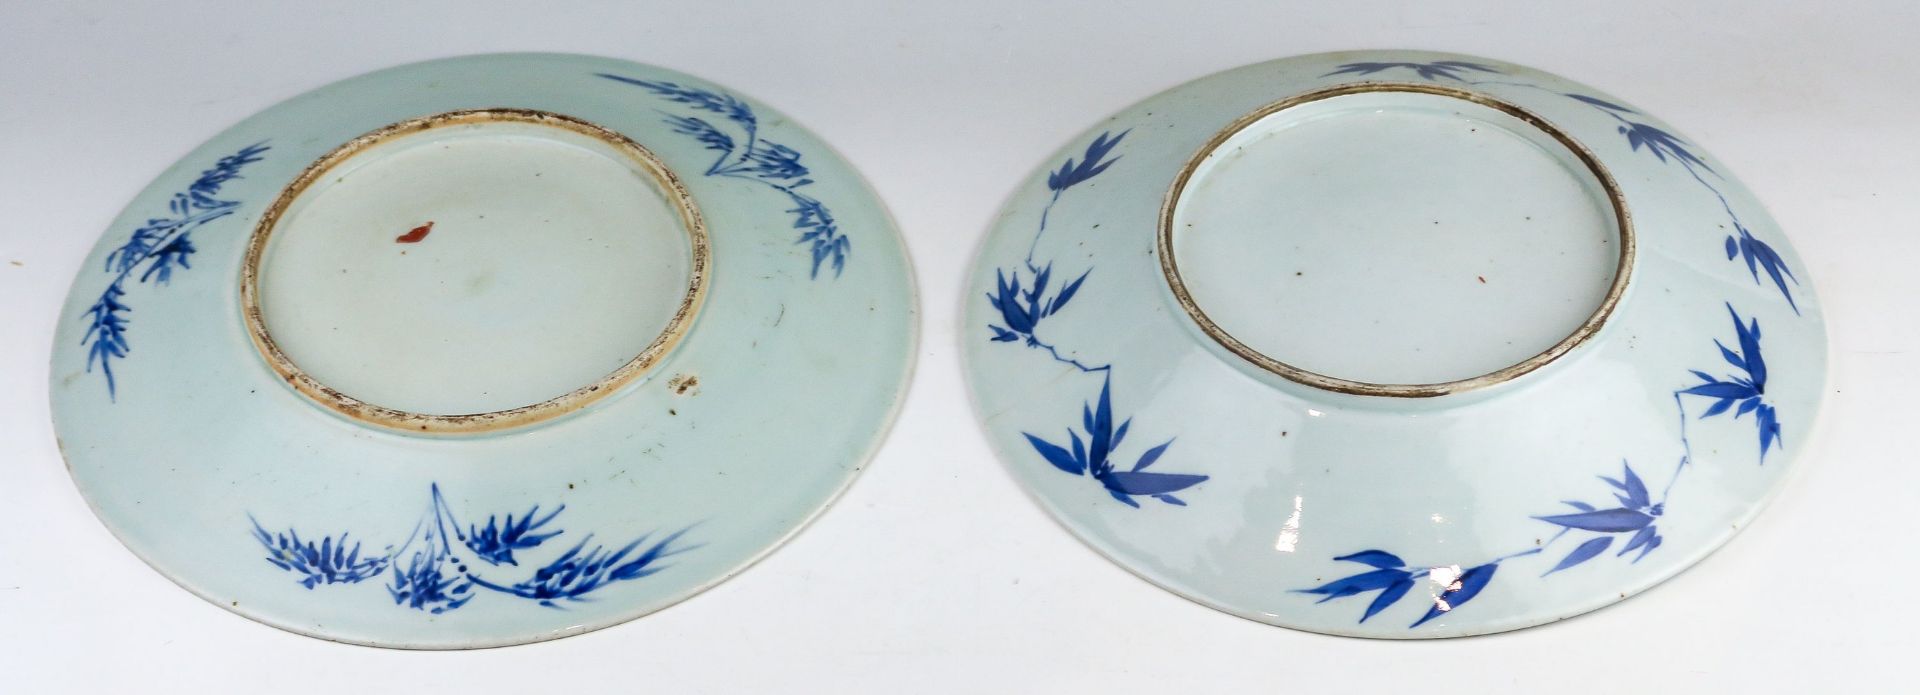 Zwei Platten mit Malerei in Unterglasurblau China - Image 2 of 2